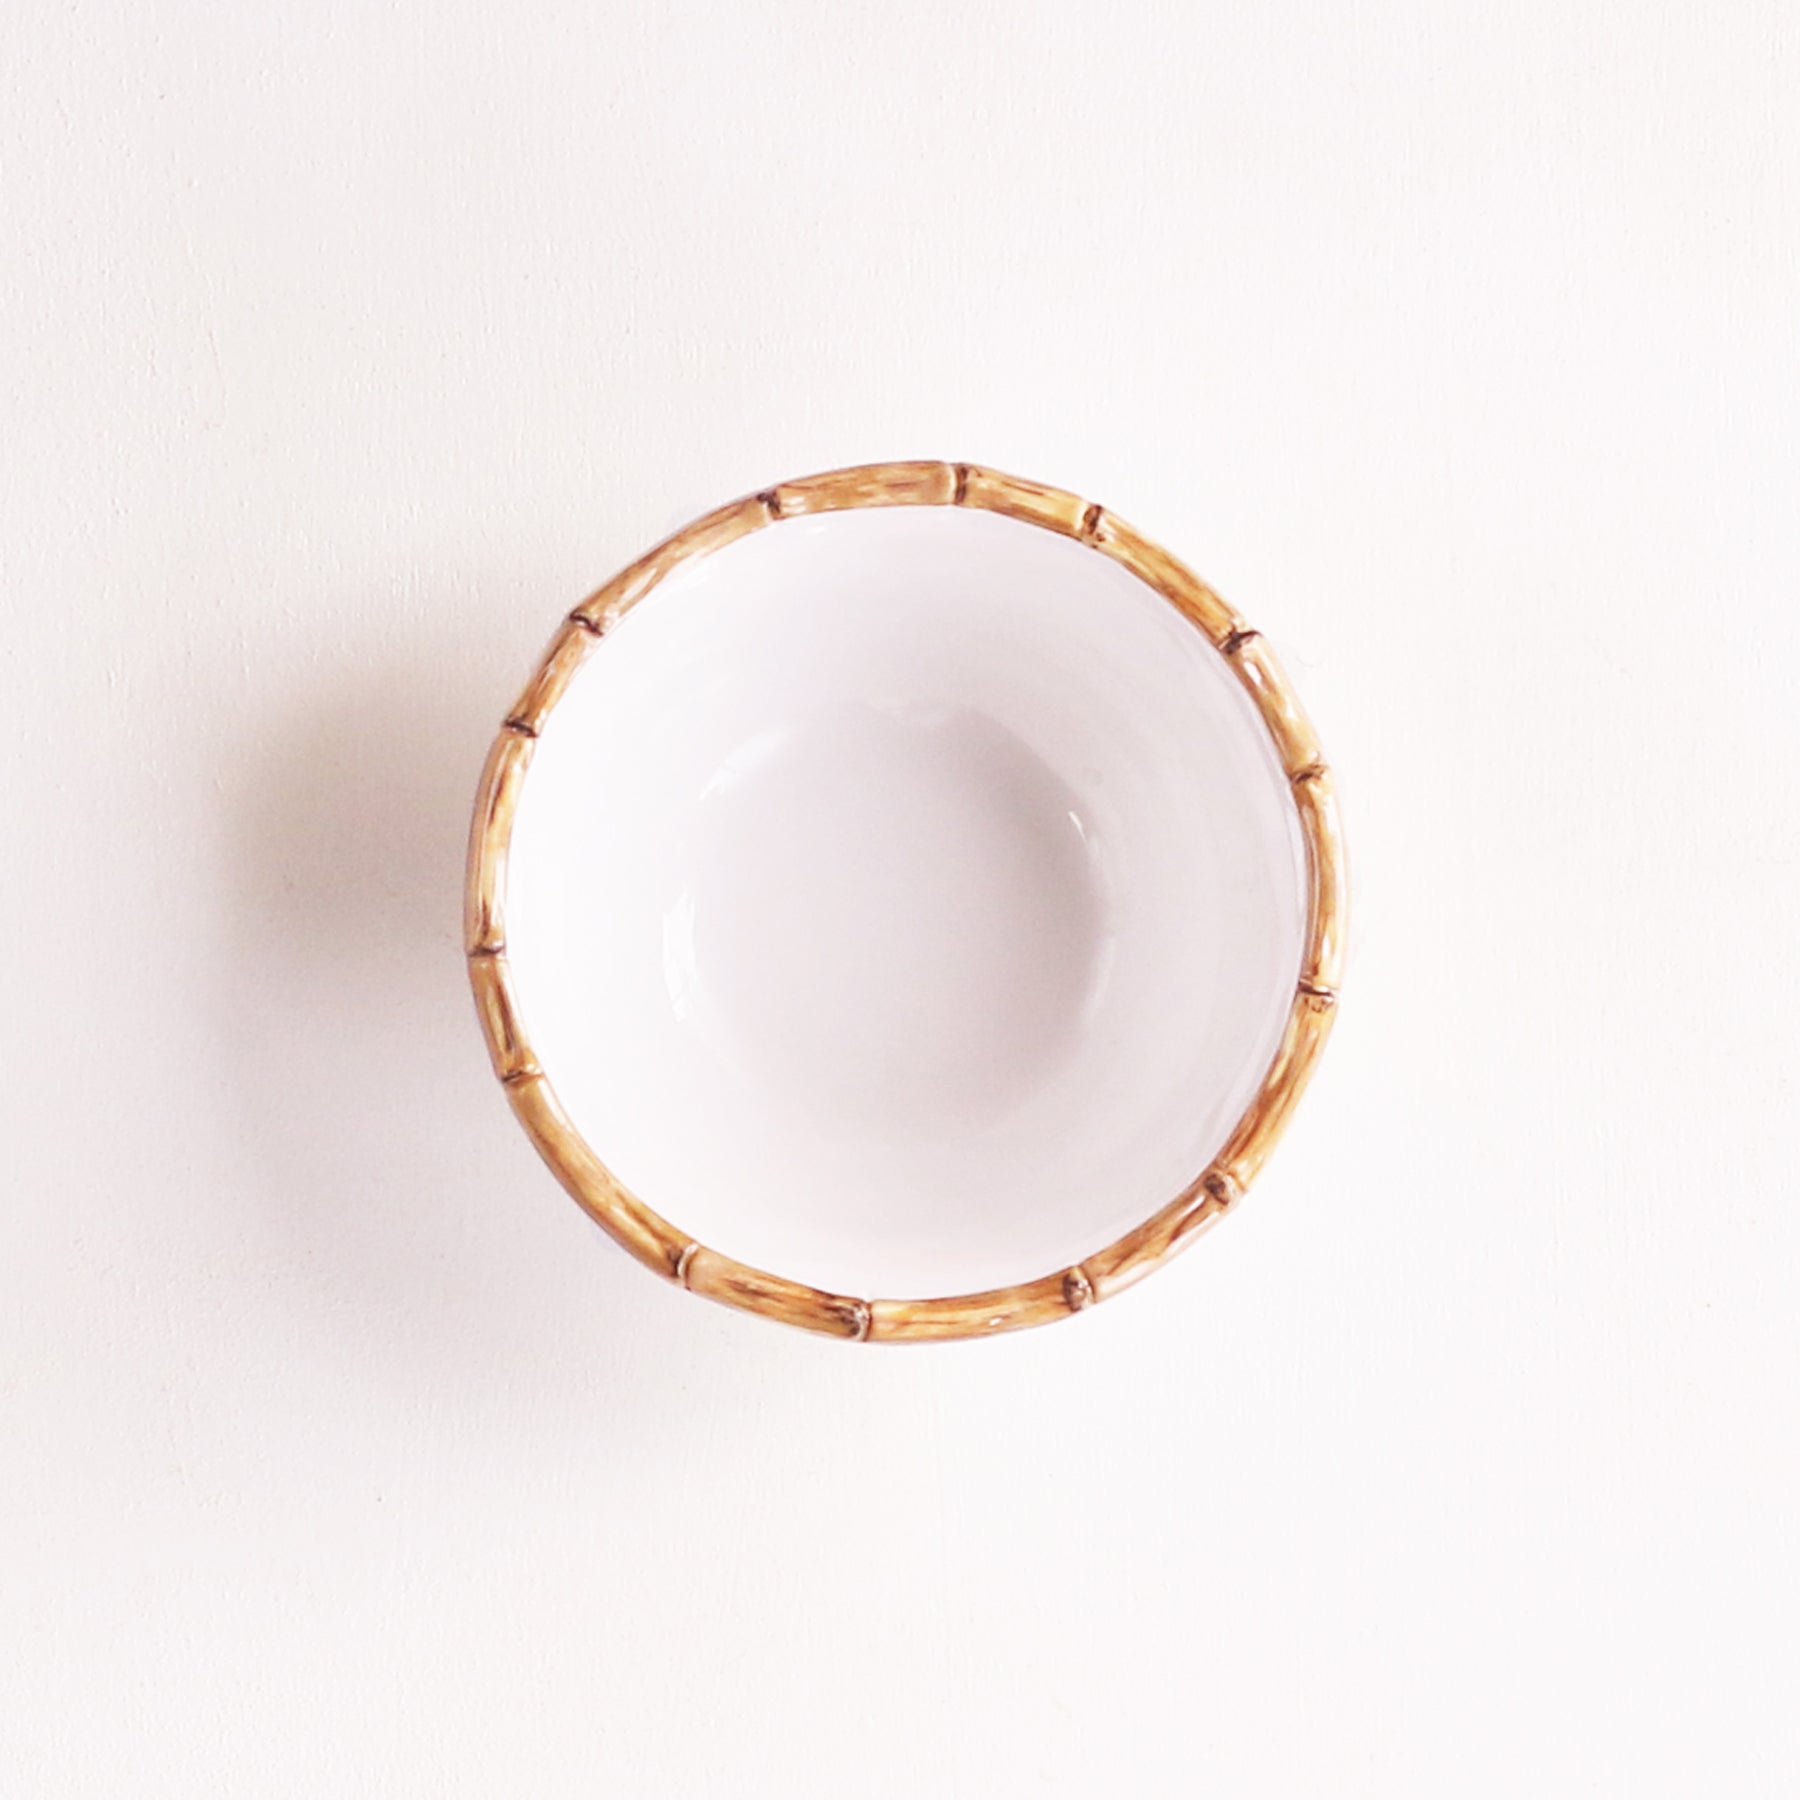 VIDA Bamboo 7.5&quot; Cereal Bowl Set of 4 (White and Natural)